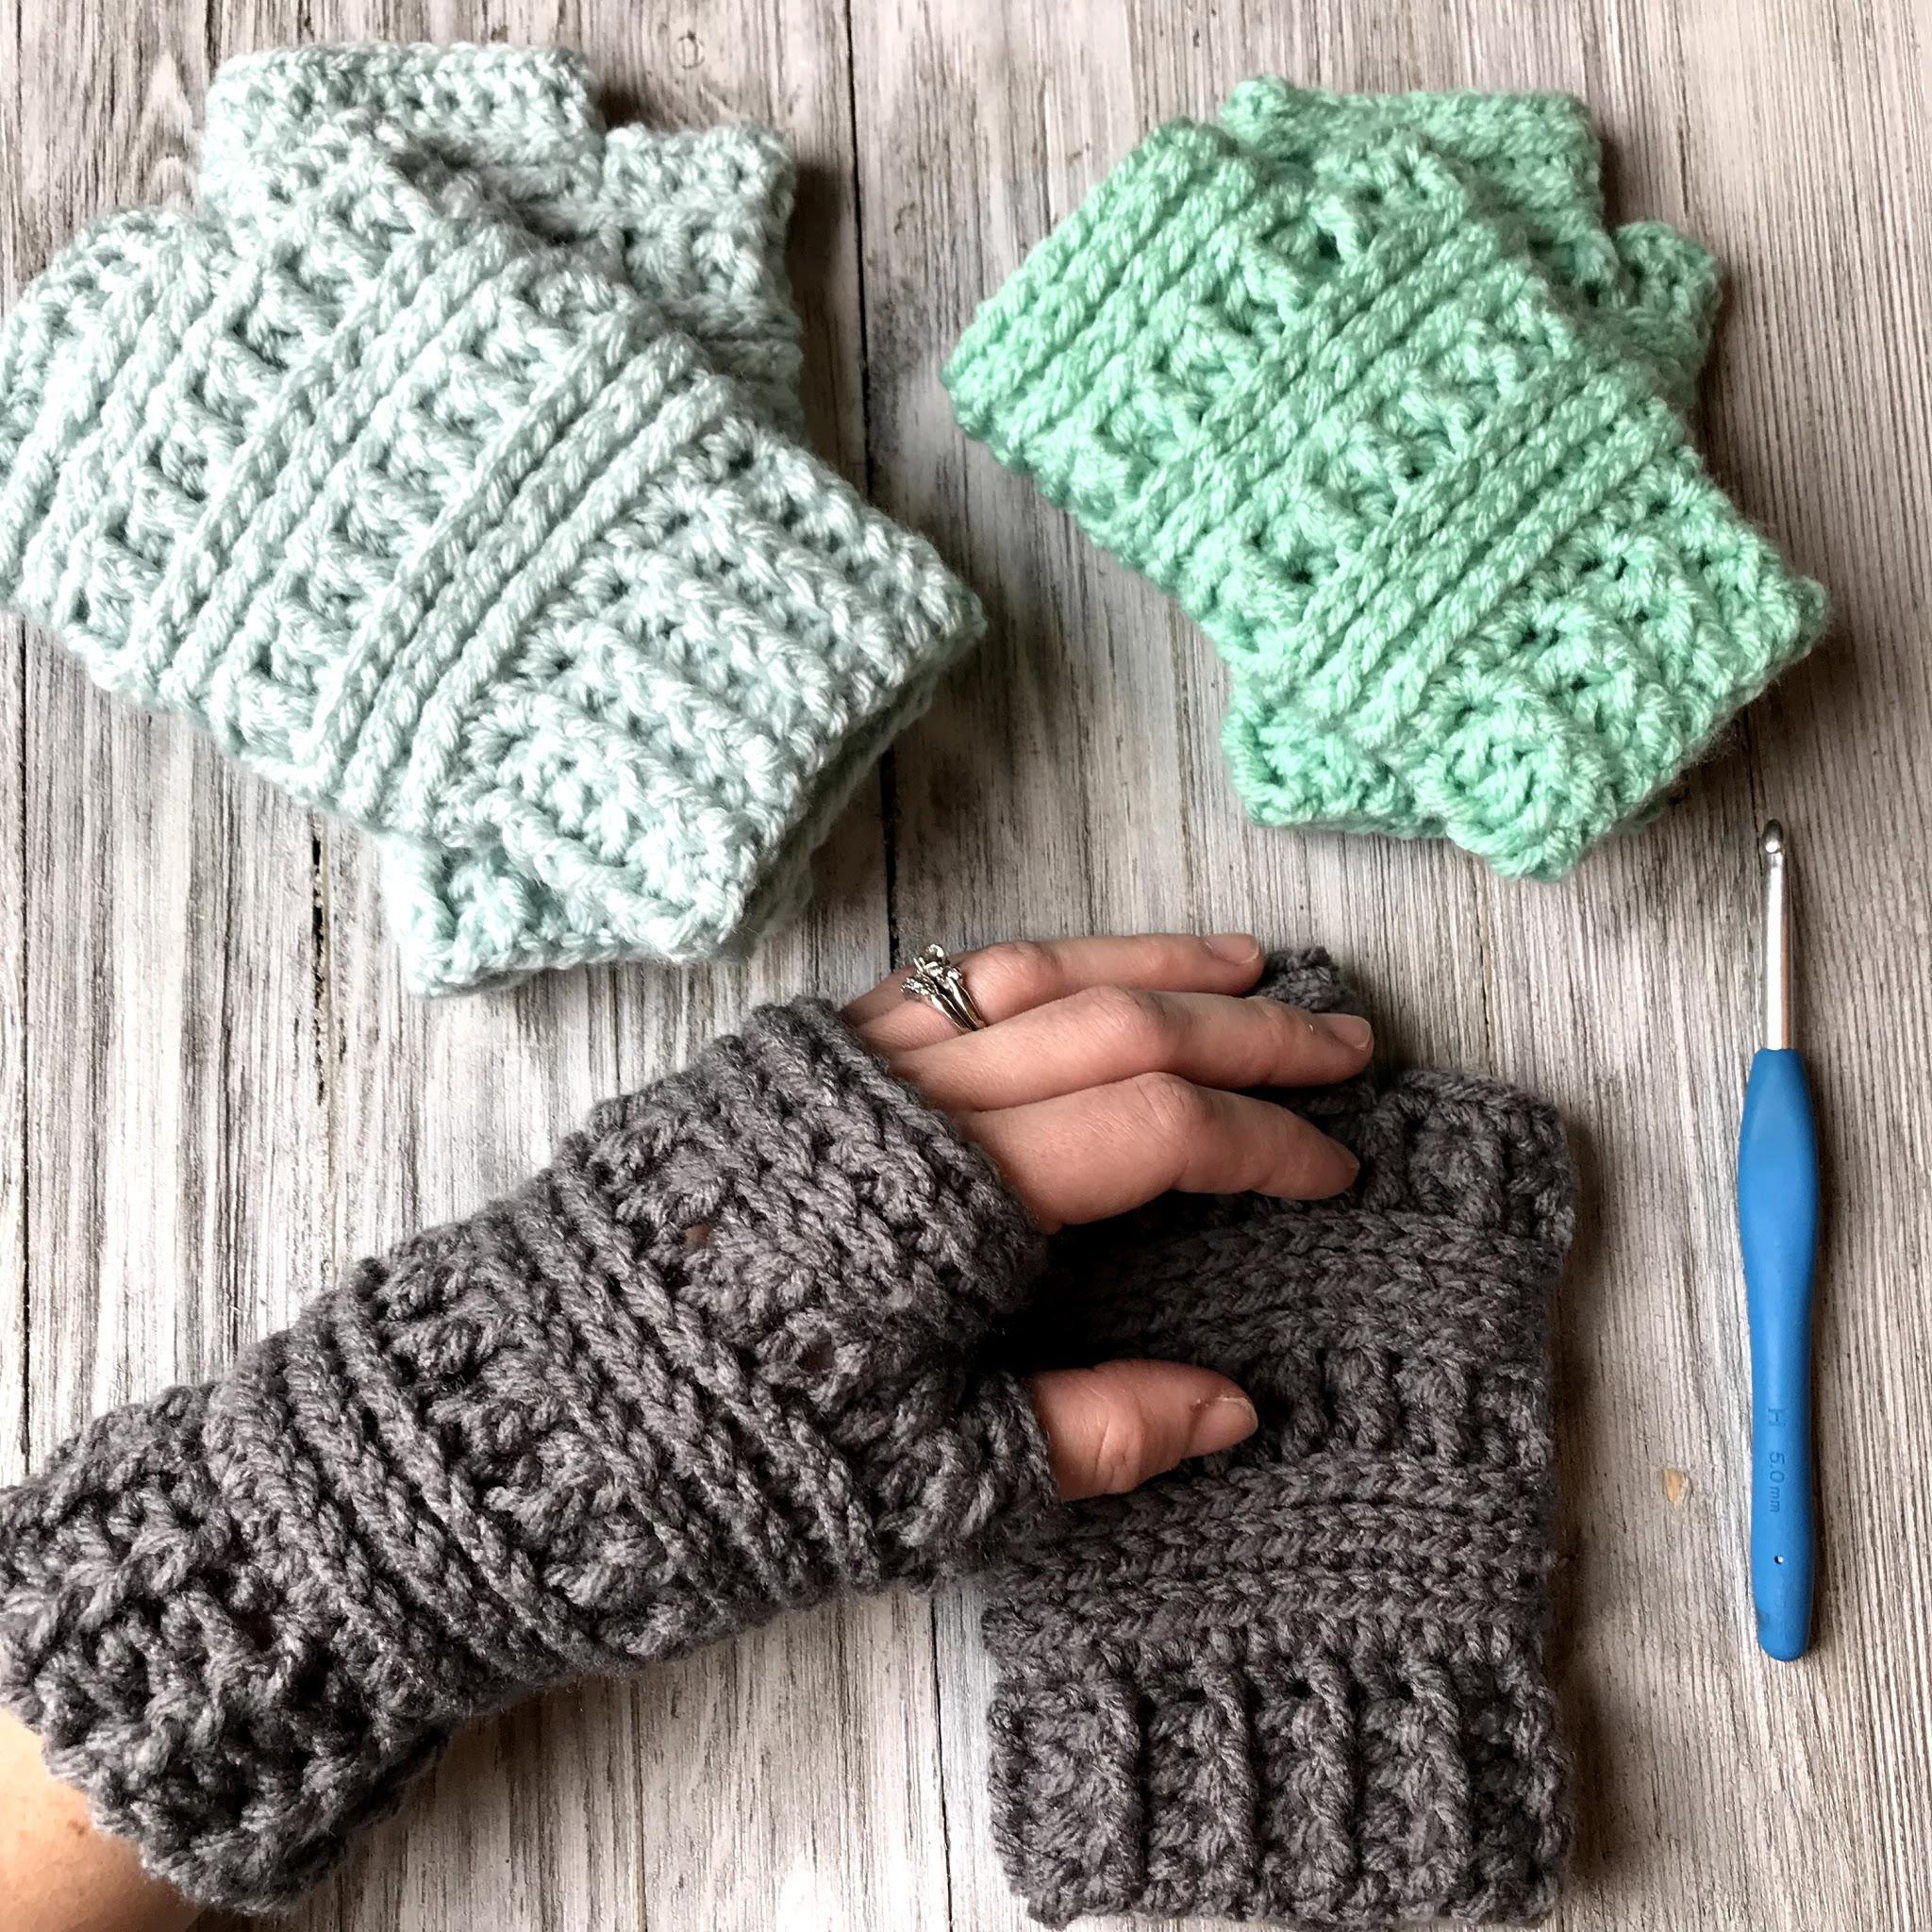 Ana Fingerless Gloves Crochet Pattern Crochet It Creations,Aquarium Substrate Support